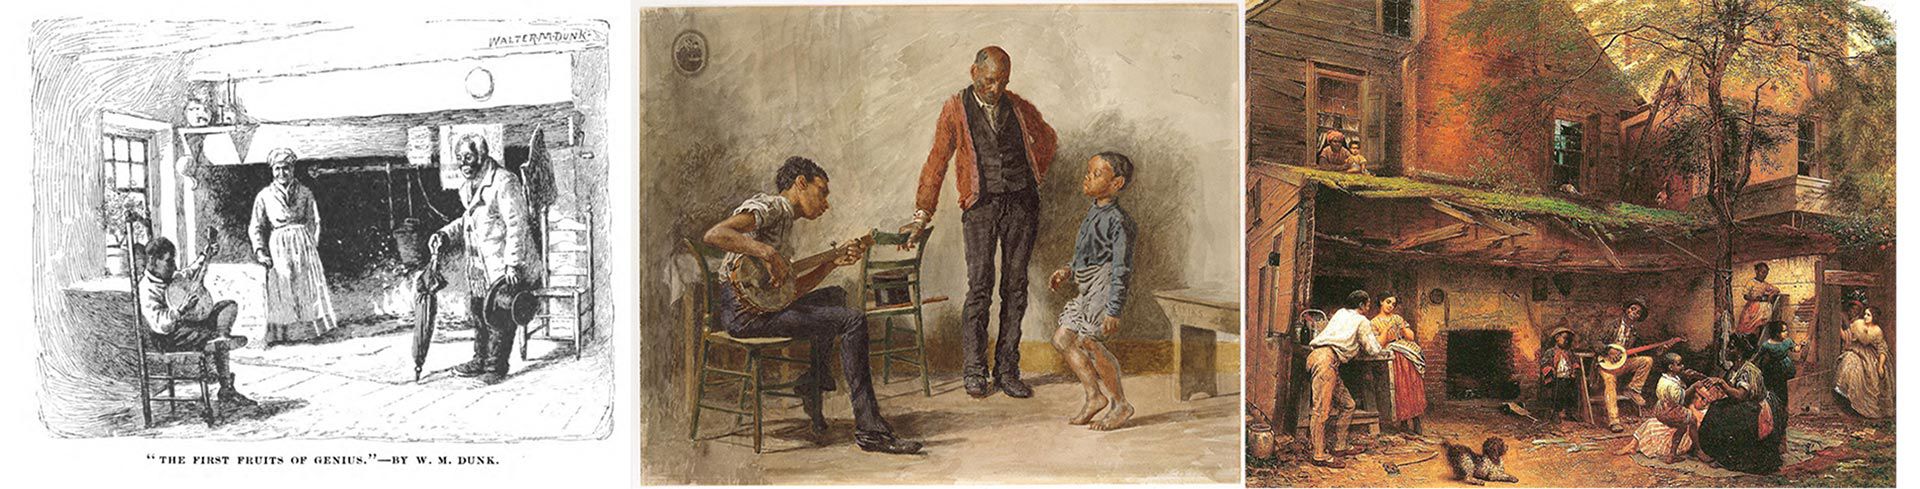 Grabado de Walter M. Dunk y pinturas de Thomas Eakins e Eastman Johnson